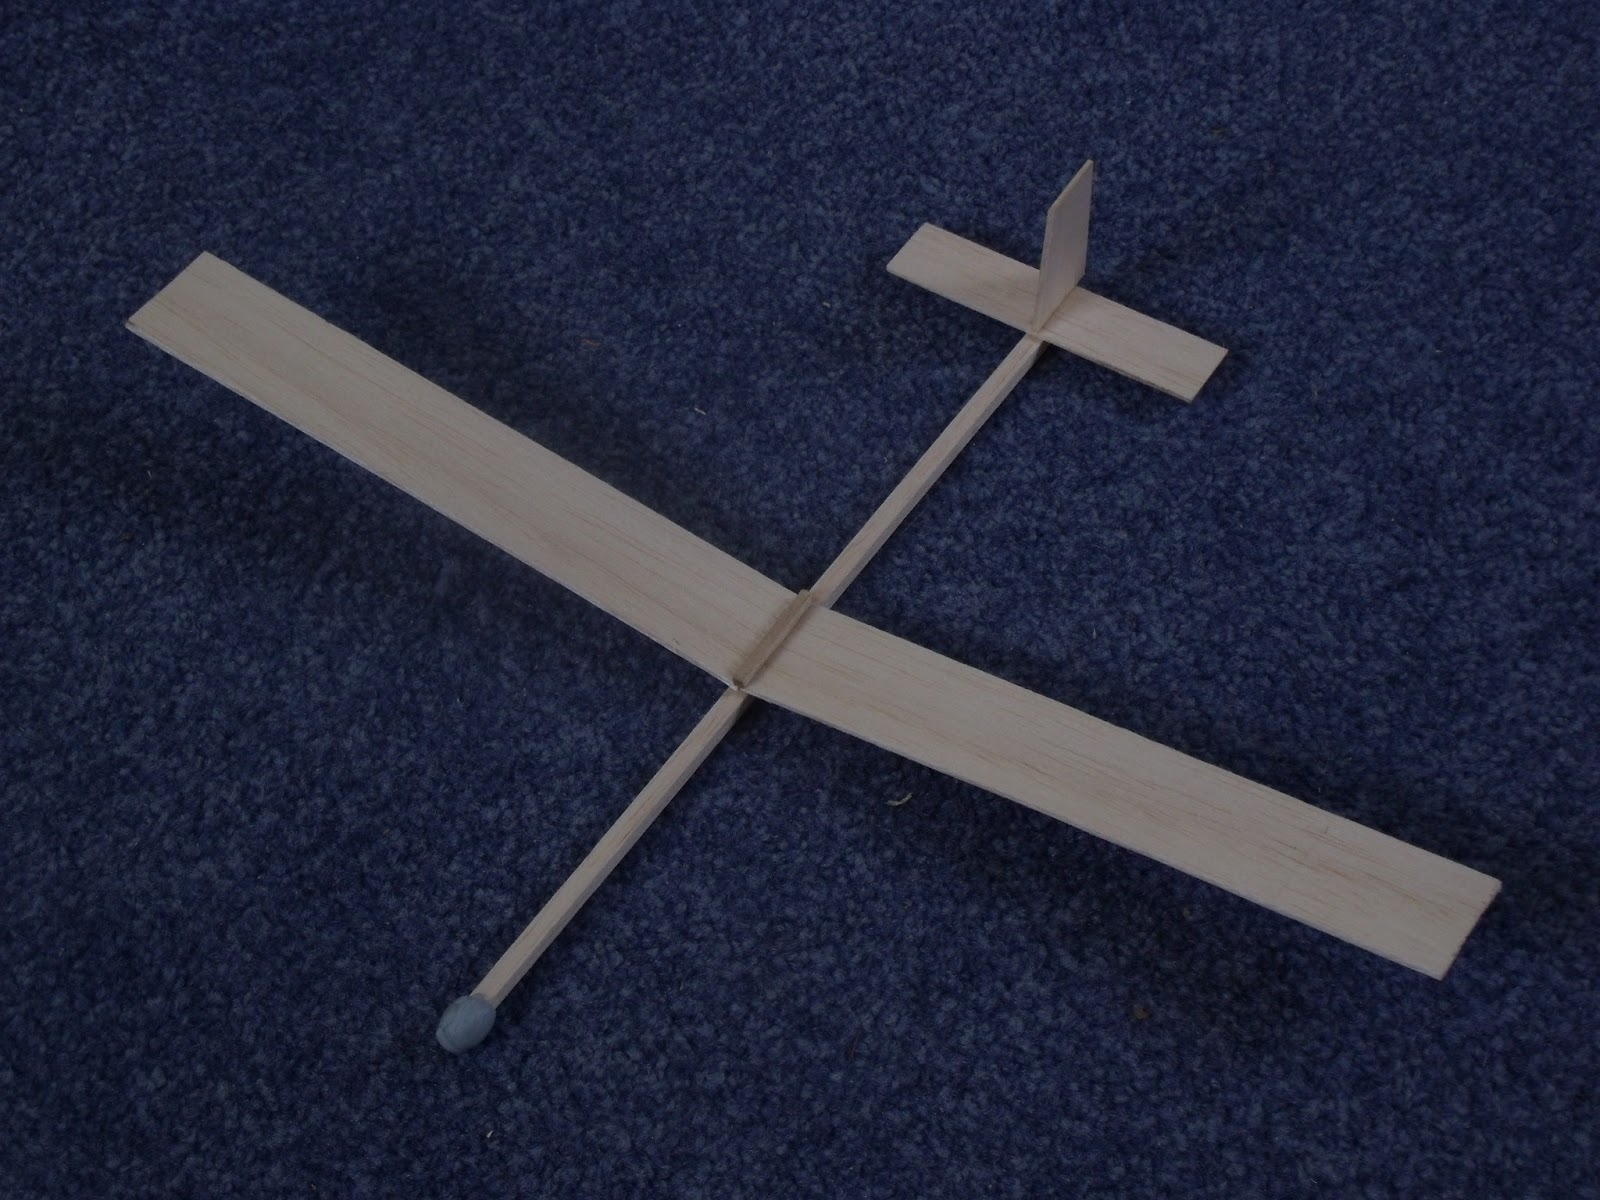 Woodworking glider plans balsa wood PDF Free Download